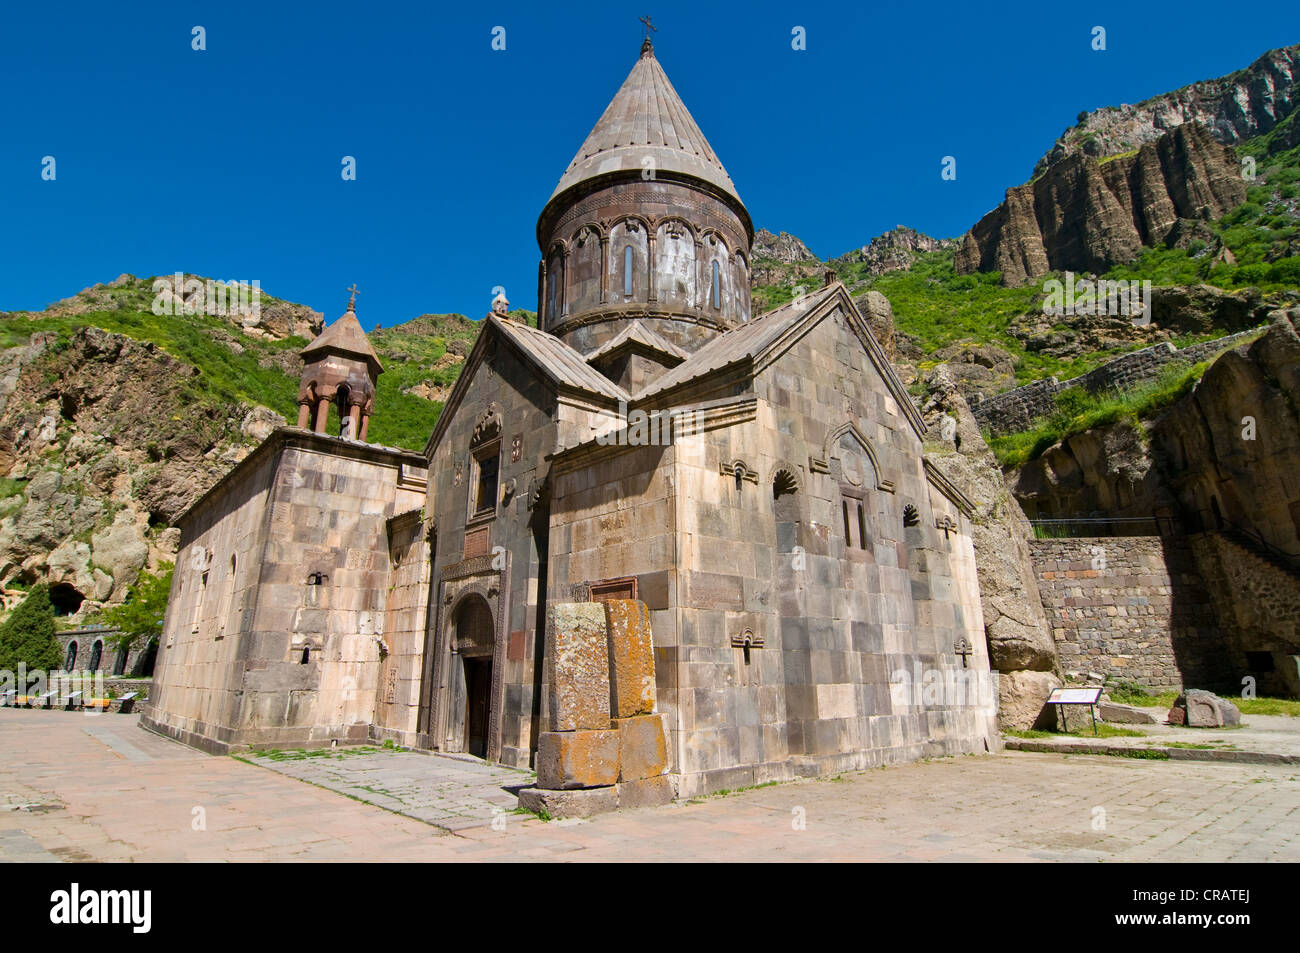 Geghard-Kloster, UNESCO World Heritage Site, Armenien, Kaukasus, Naher Osten Stockfoto